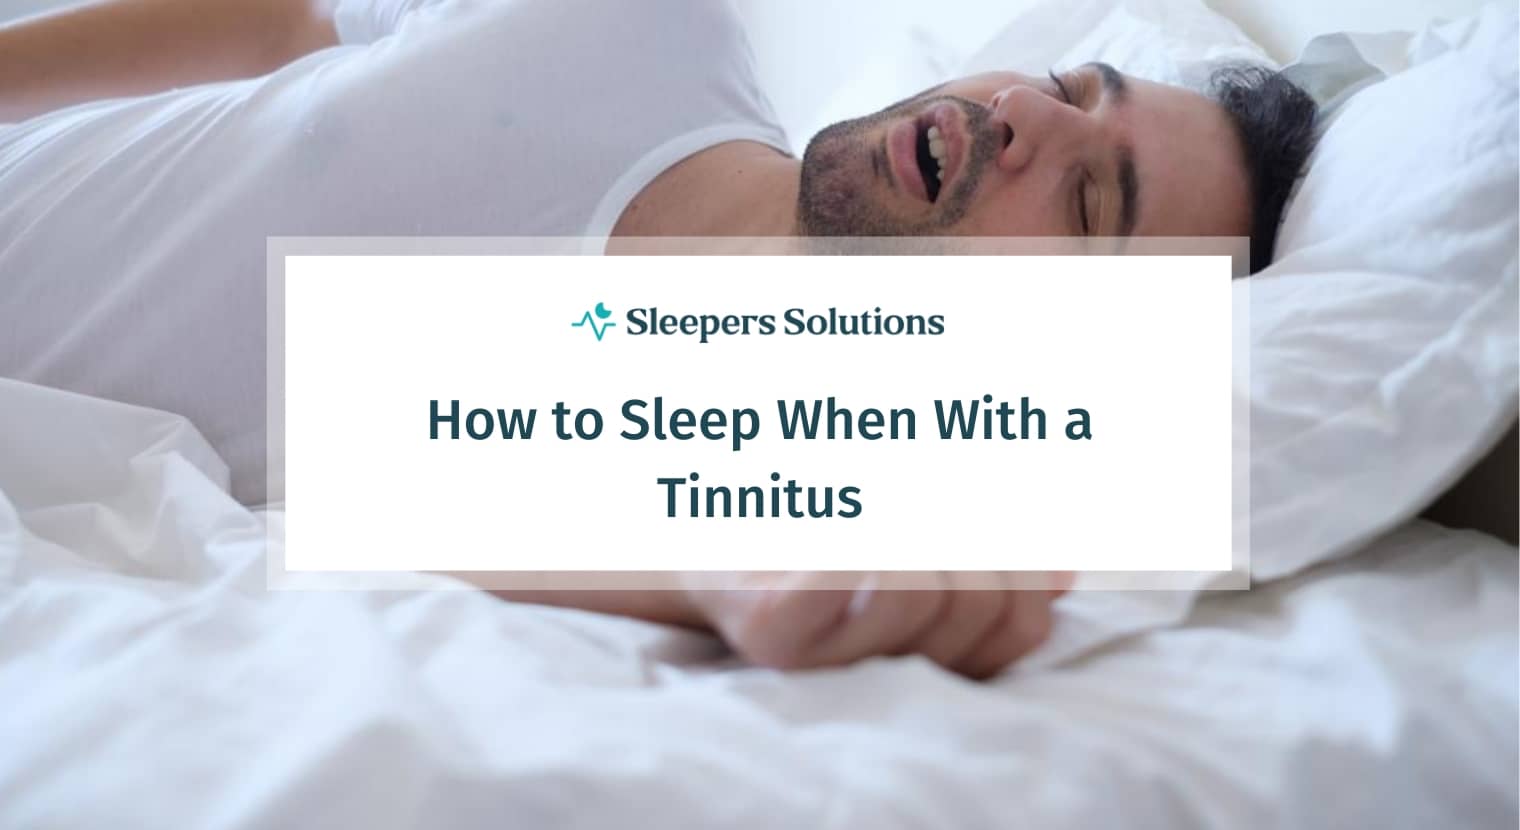 How to Sleep With Tinnitus